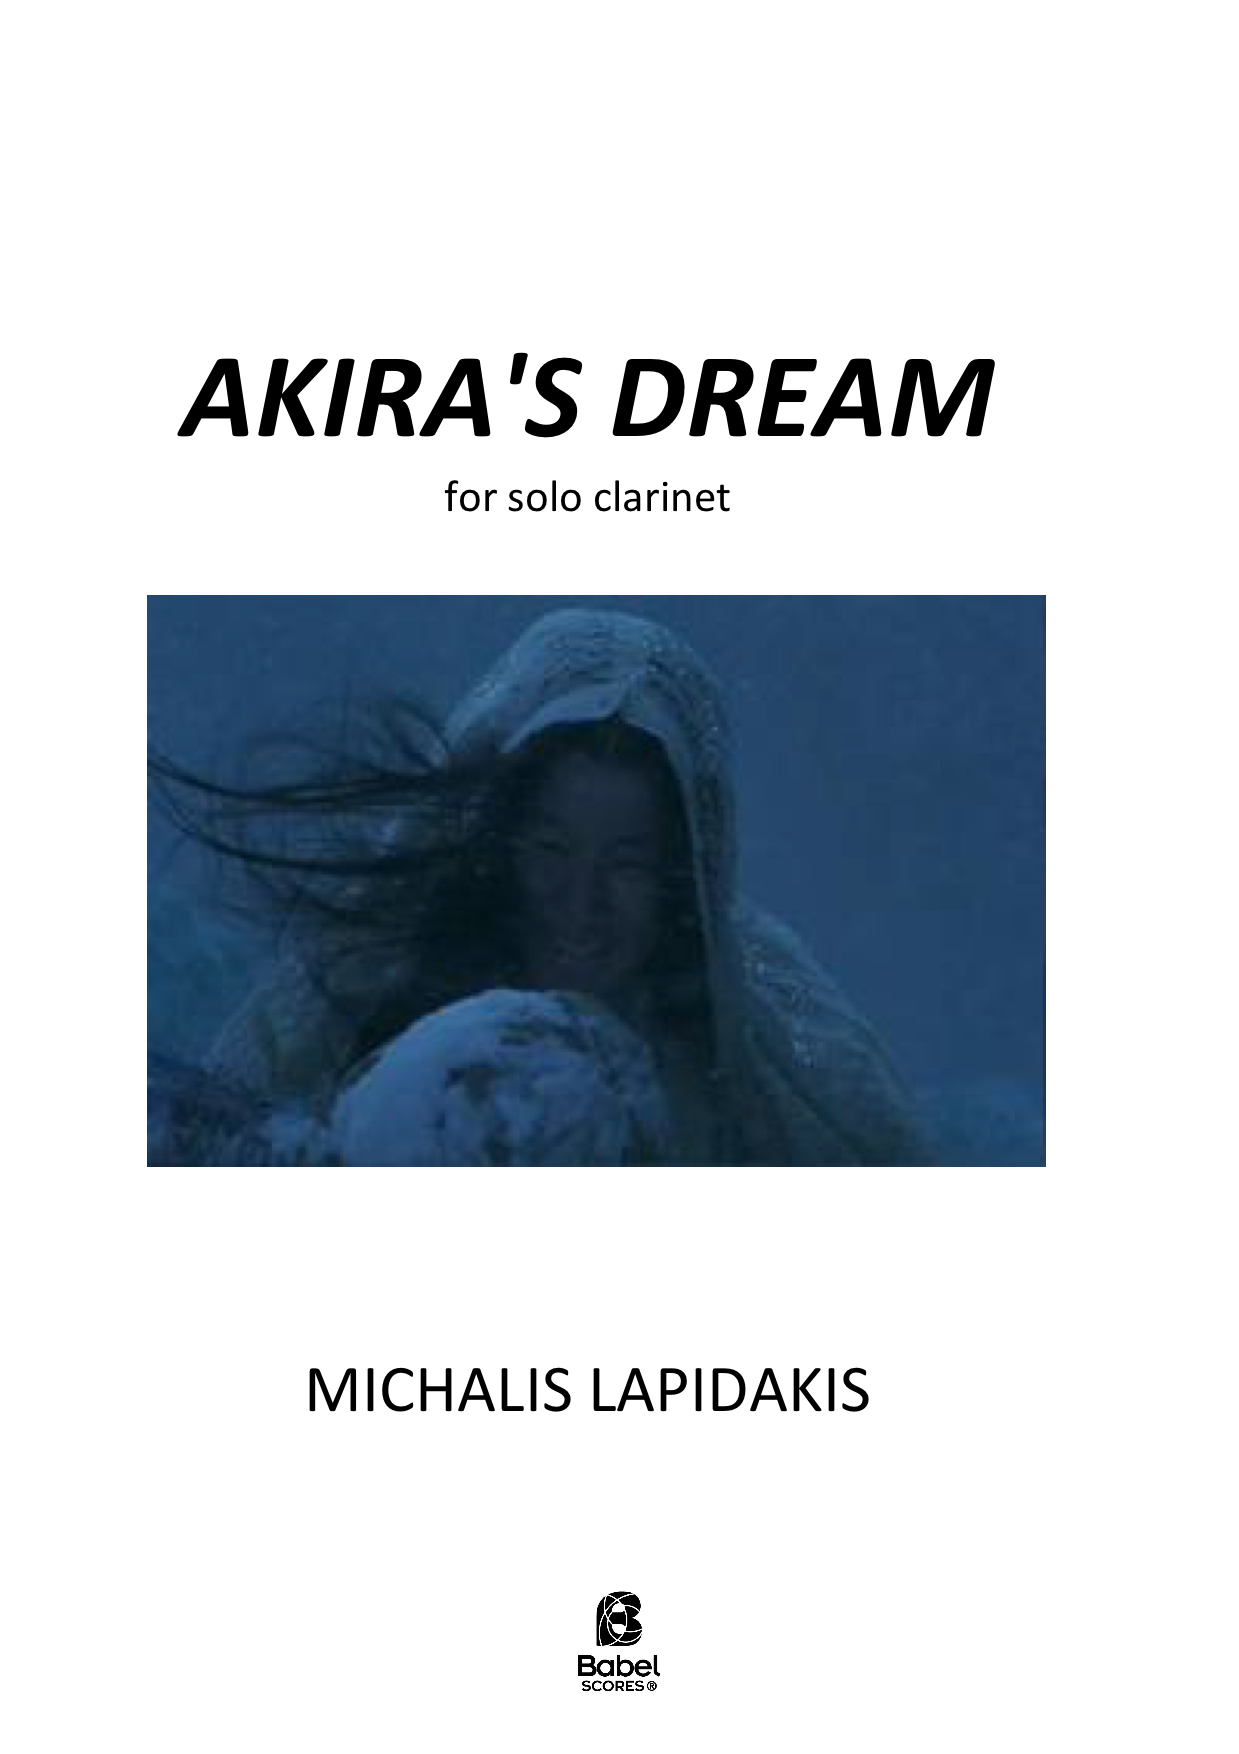 AKIRAS DREAM OP 17 A4 z 2 1 639